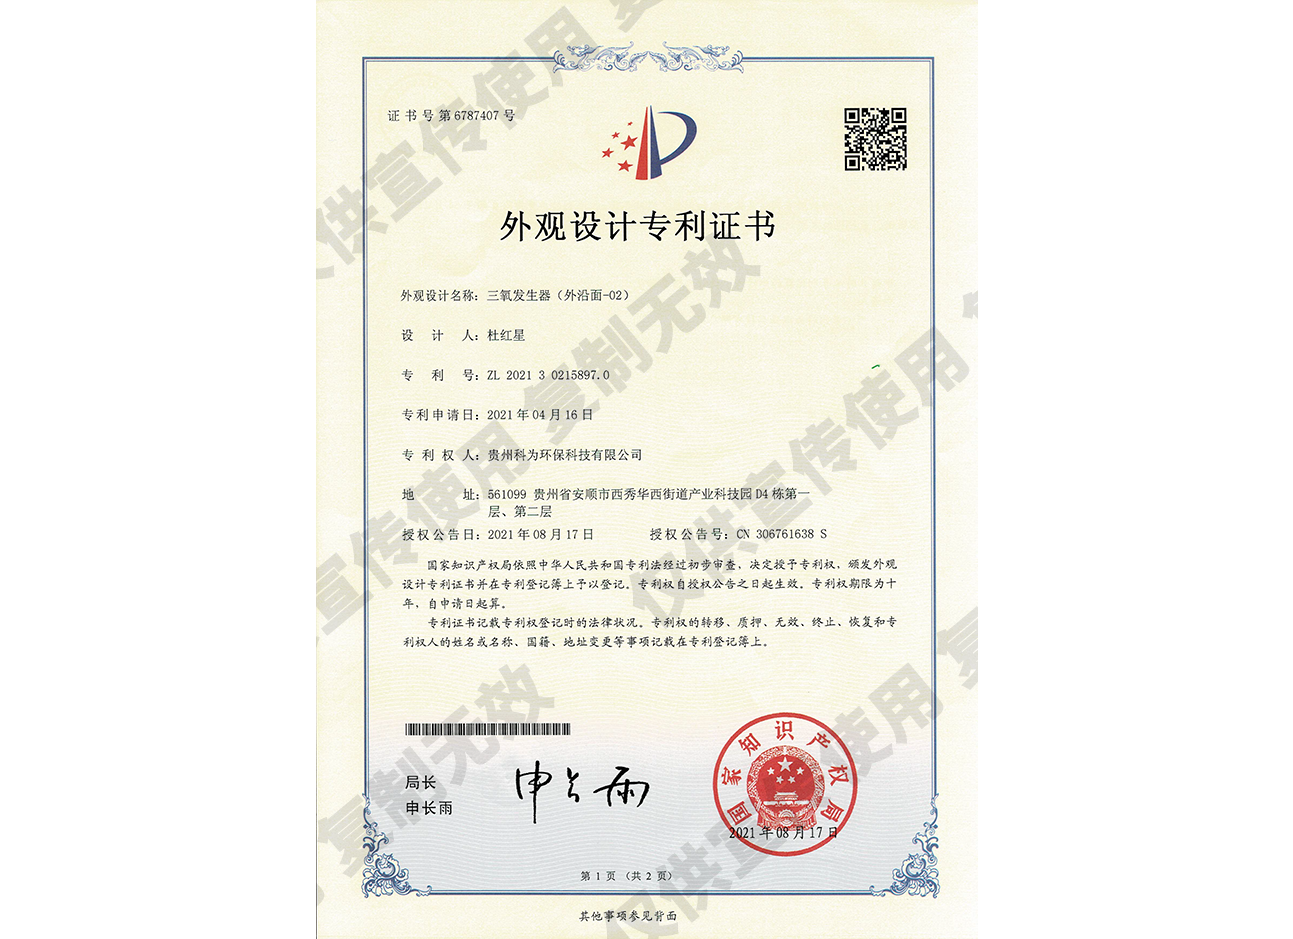 O3 Generator (Outer Edge-02) Design Patent Certificate (6787407)